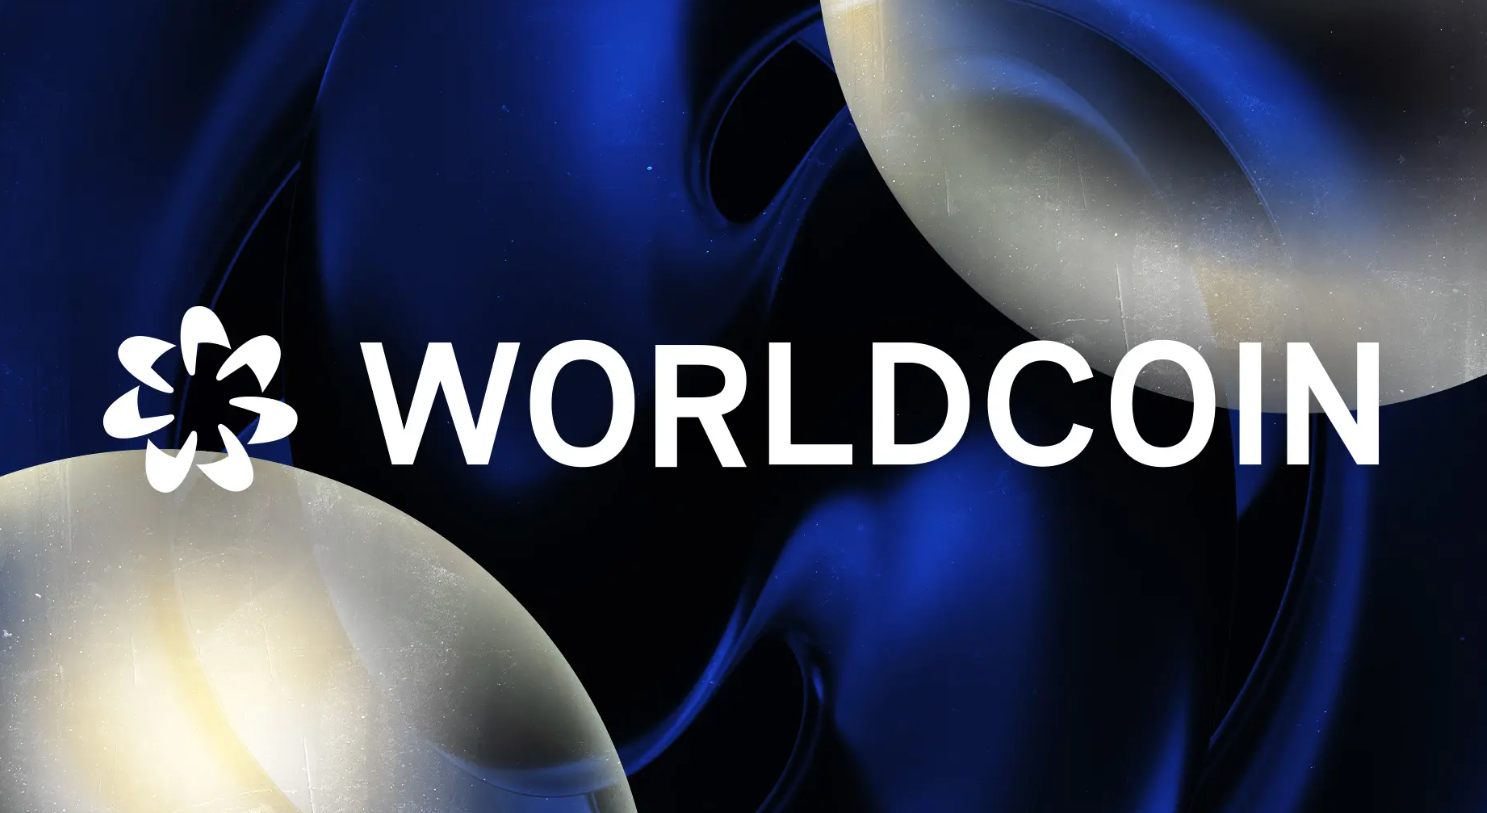 Worldcoin Developer Raises $115M For A Series C Funding Round